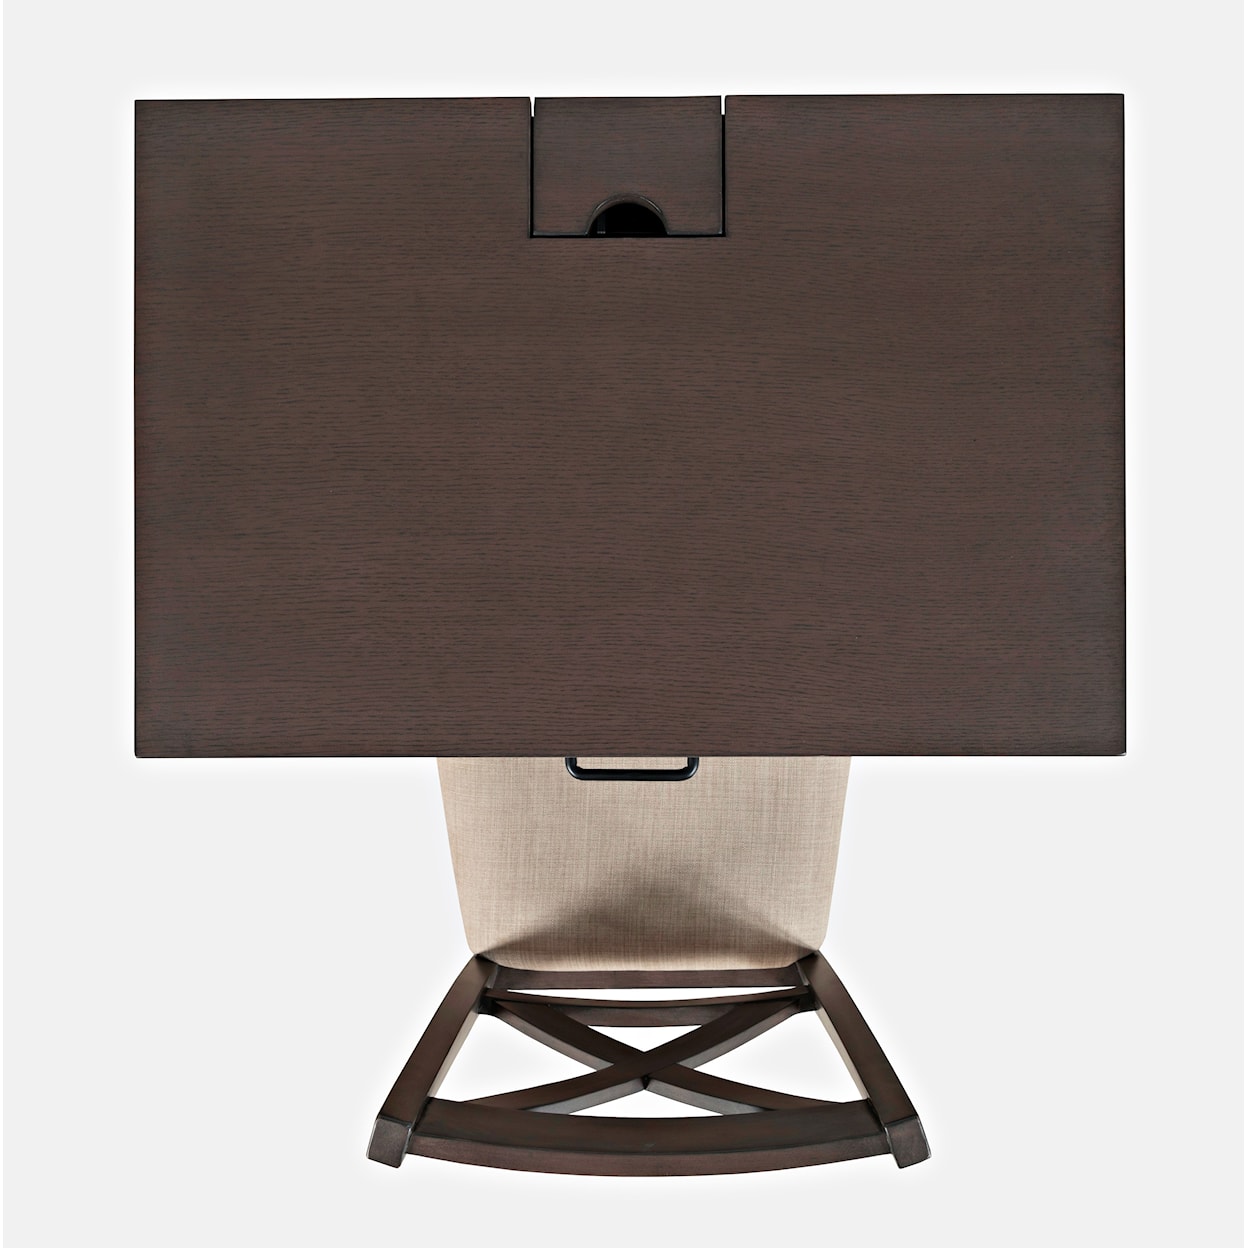 Belfort Essentials Hobson Desk Chair